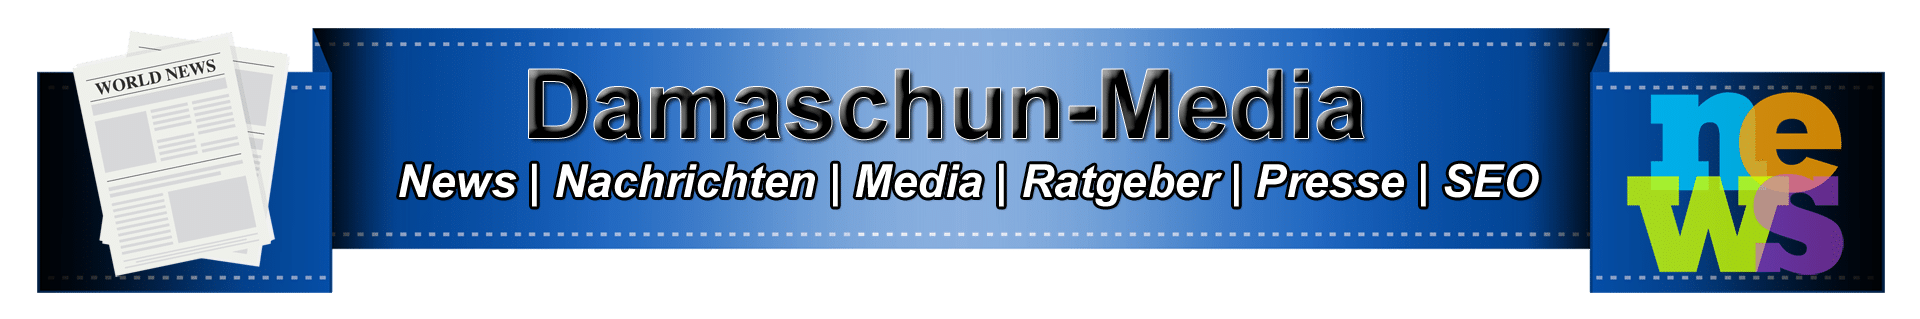 Damaschun-Media-Banner-News-Nachrichten-Media-Ratgeber-Presse-SEO